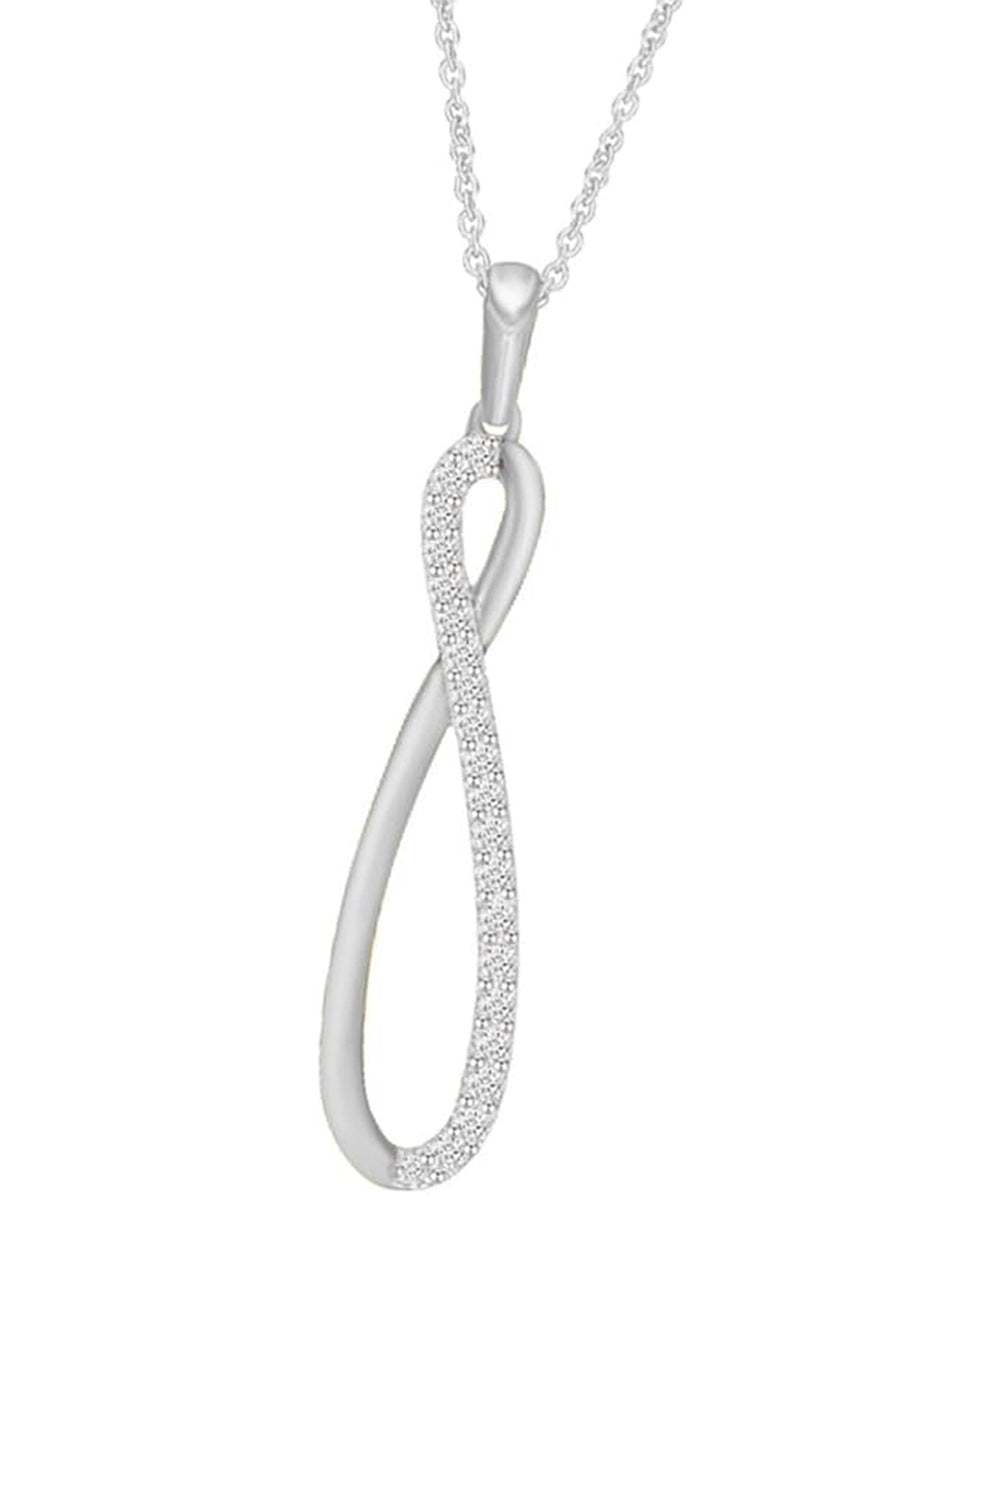 White Gold Color Round Cut Moissanite Diamond Infinity Pendant Necklace